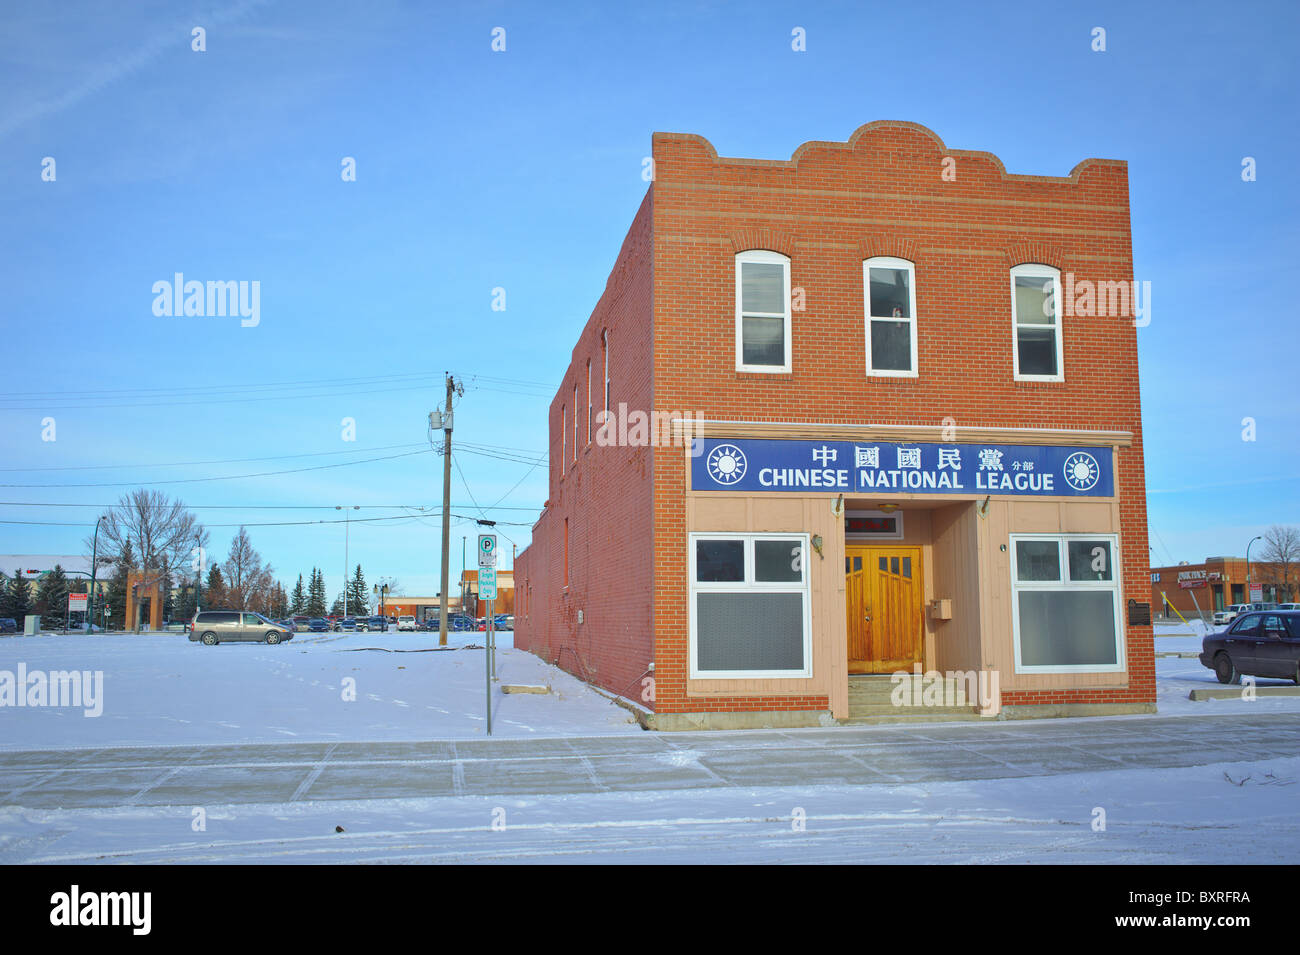 Chinesische National League Gebäude in Lethbridge in Alberta Kanada Stockfoto